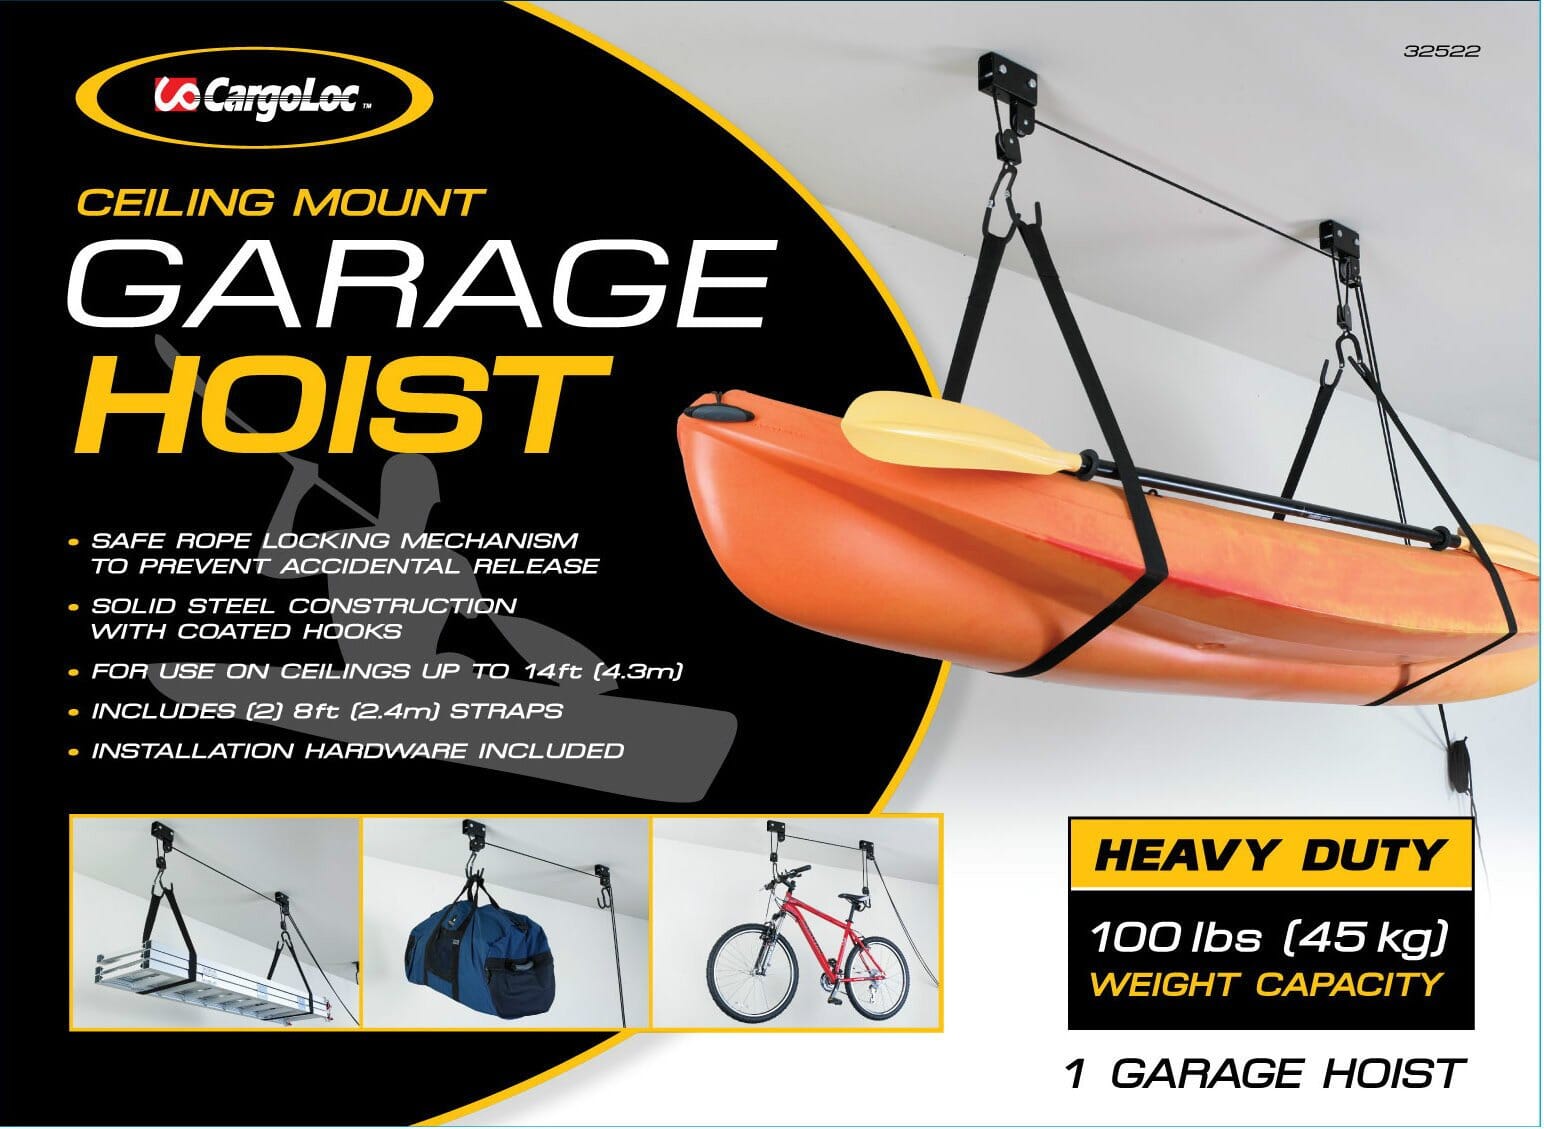 Cargoloc Garage Hoist-Ceiling Mount 45Kg Capacity #32522